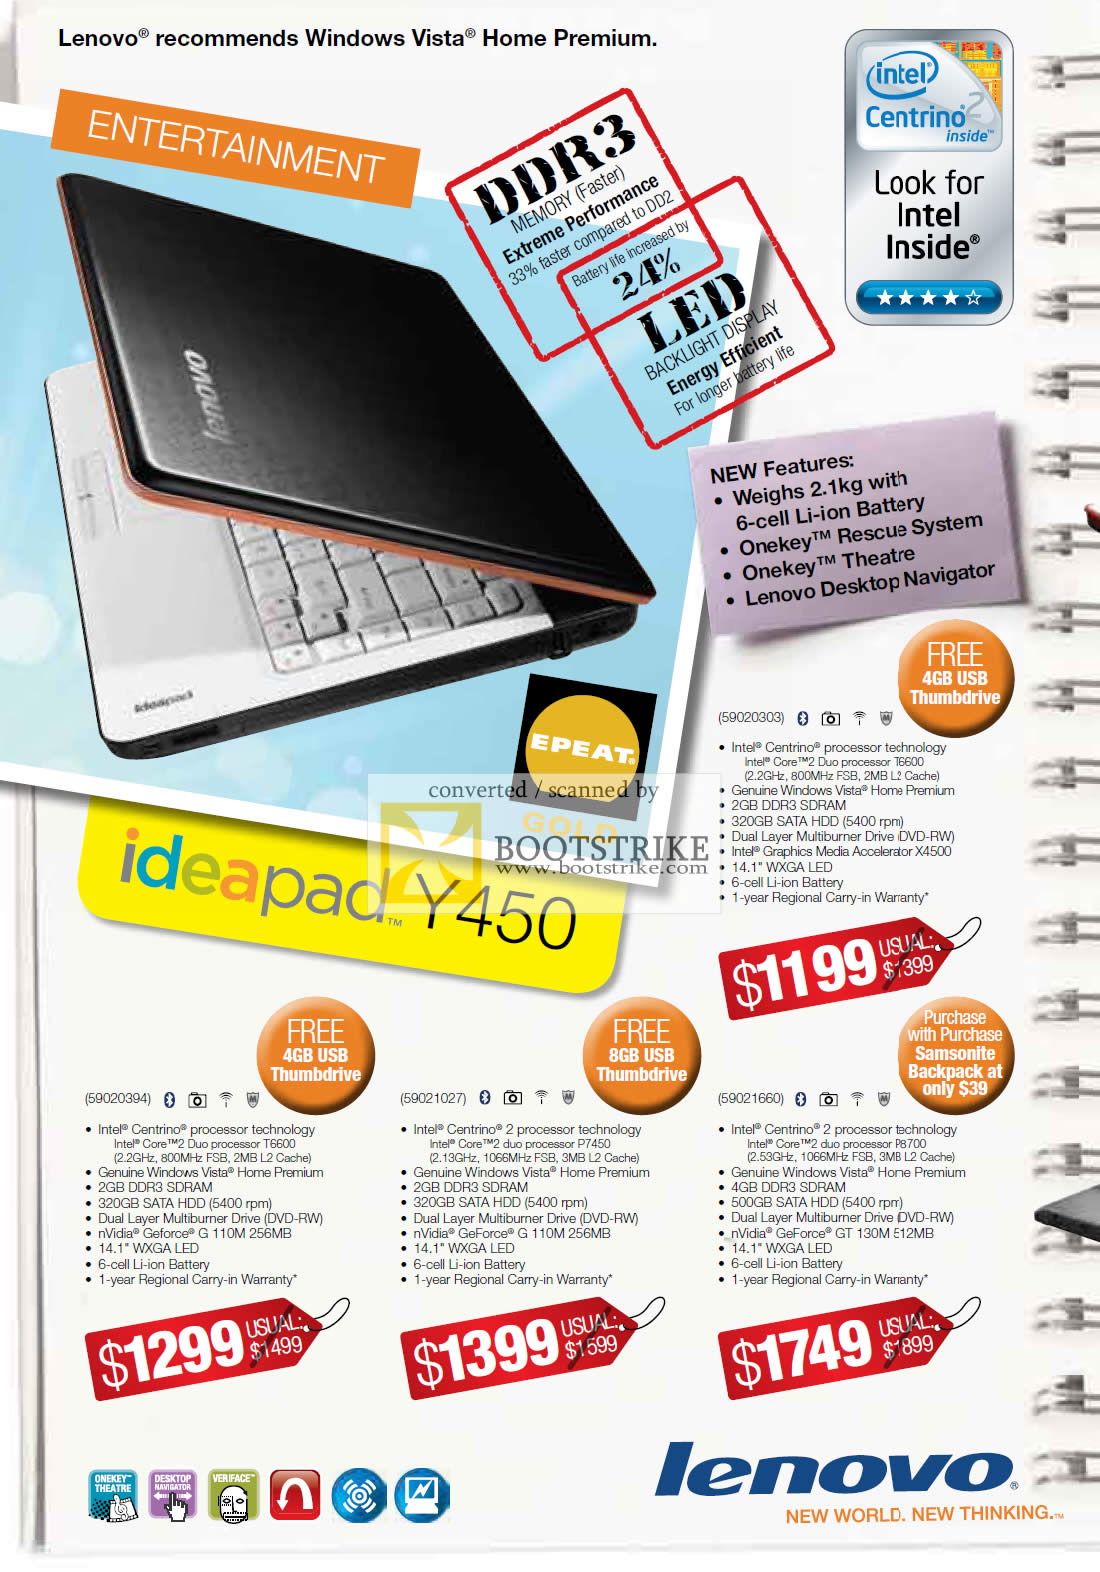 PC Show 2009 price list image brochure of Lenovo Ideapad Y450